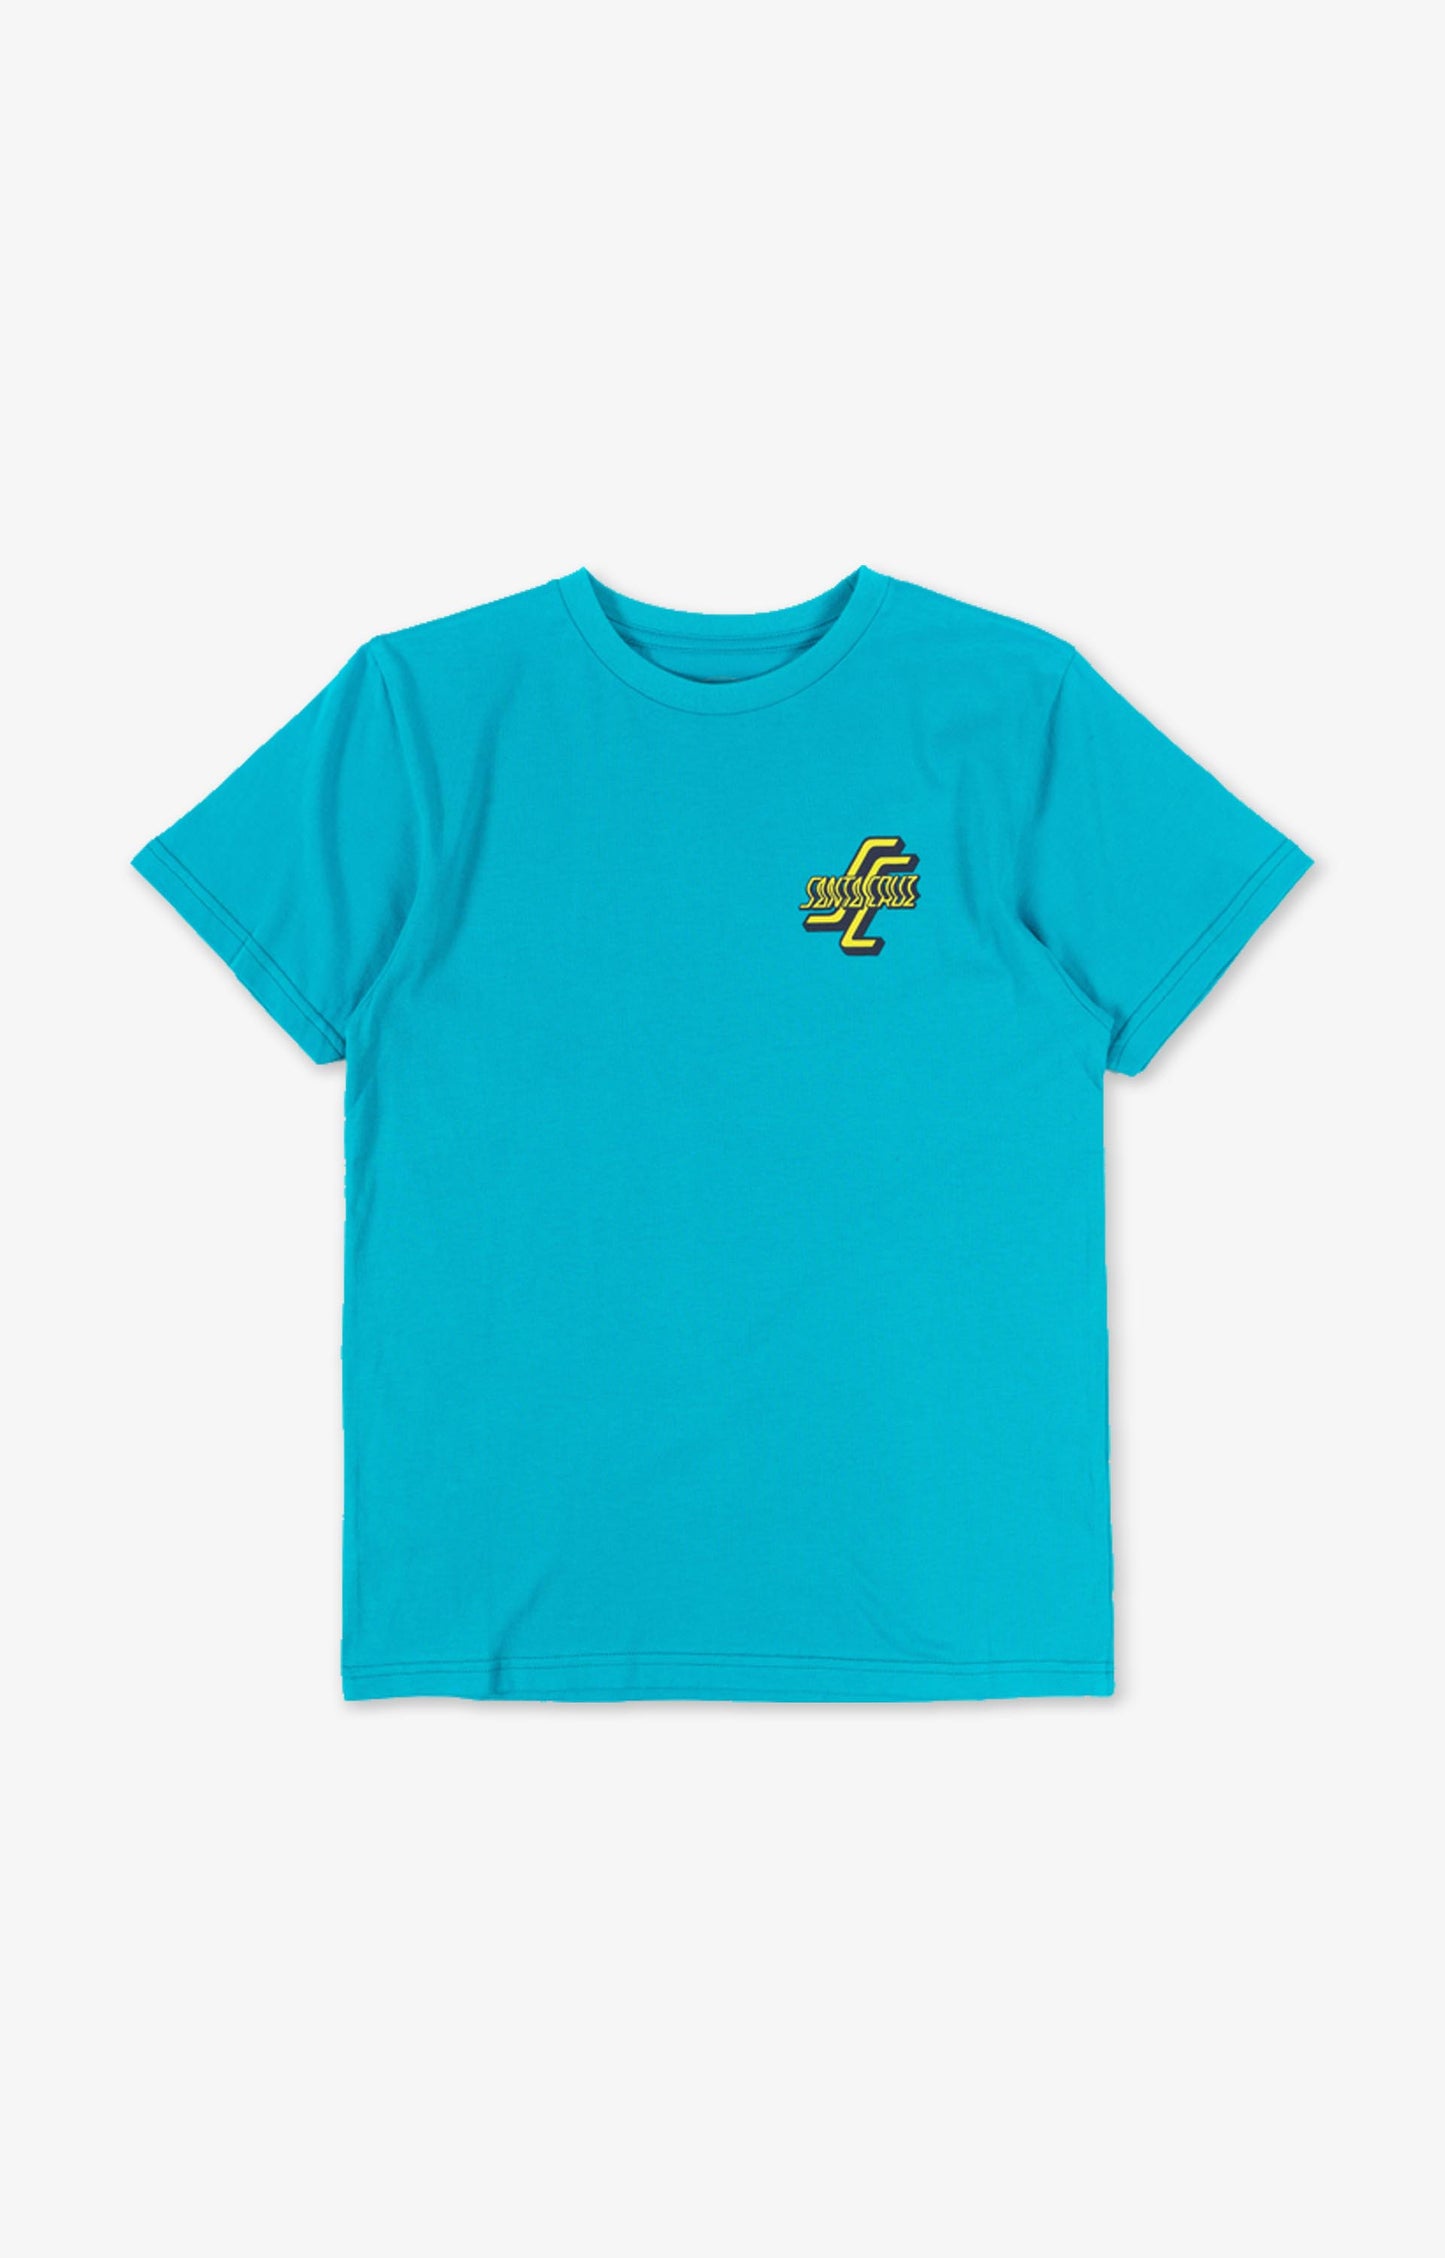 Santa Cruz Copy Hand Youth T-Shirt, Caribbean Sea